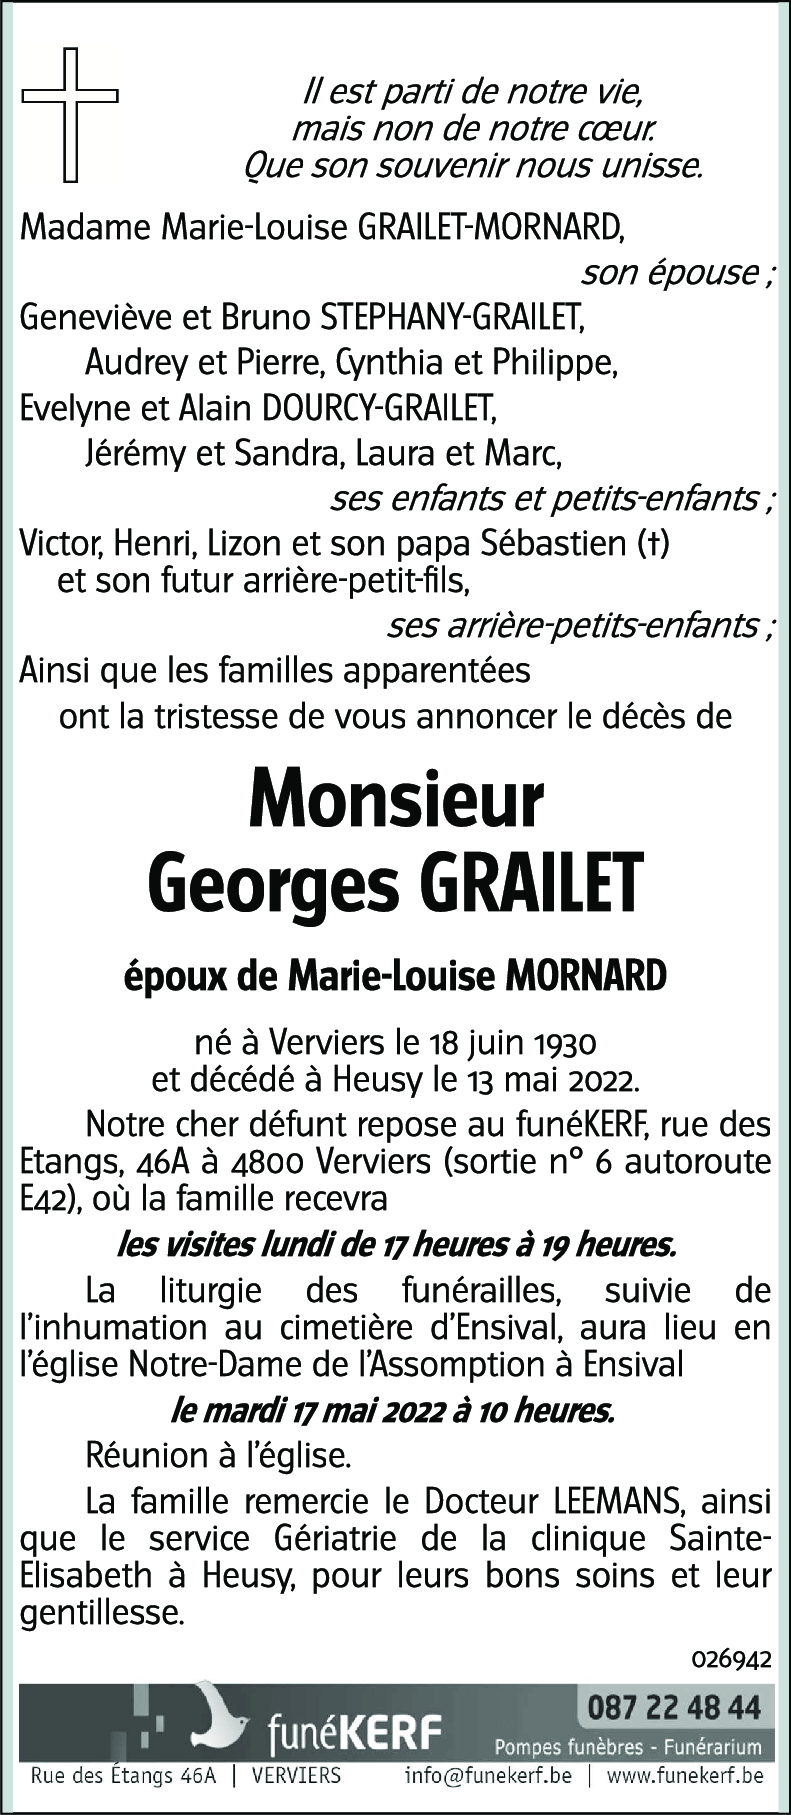 Georges GRAILET